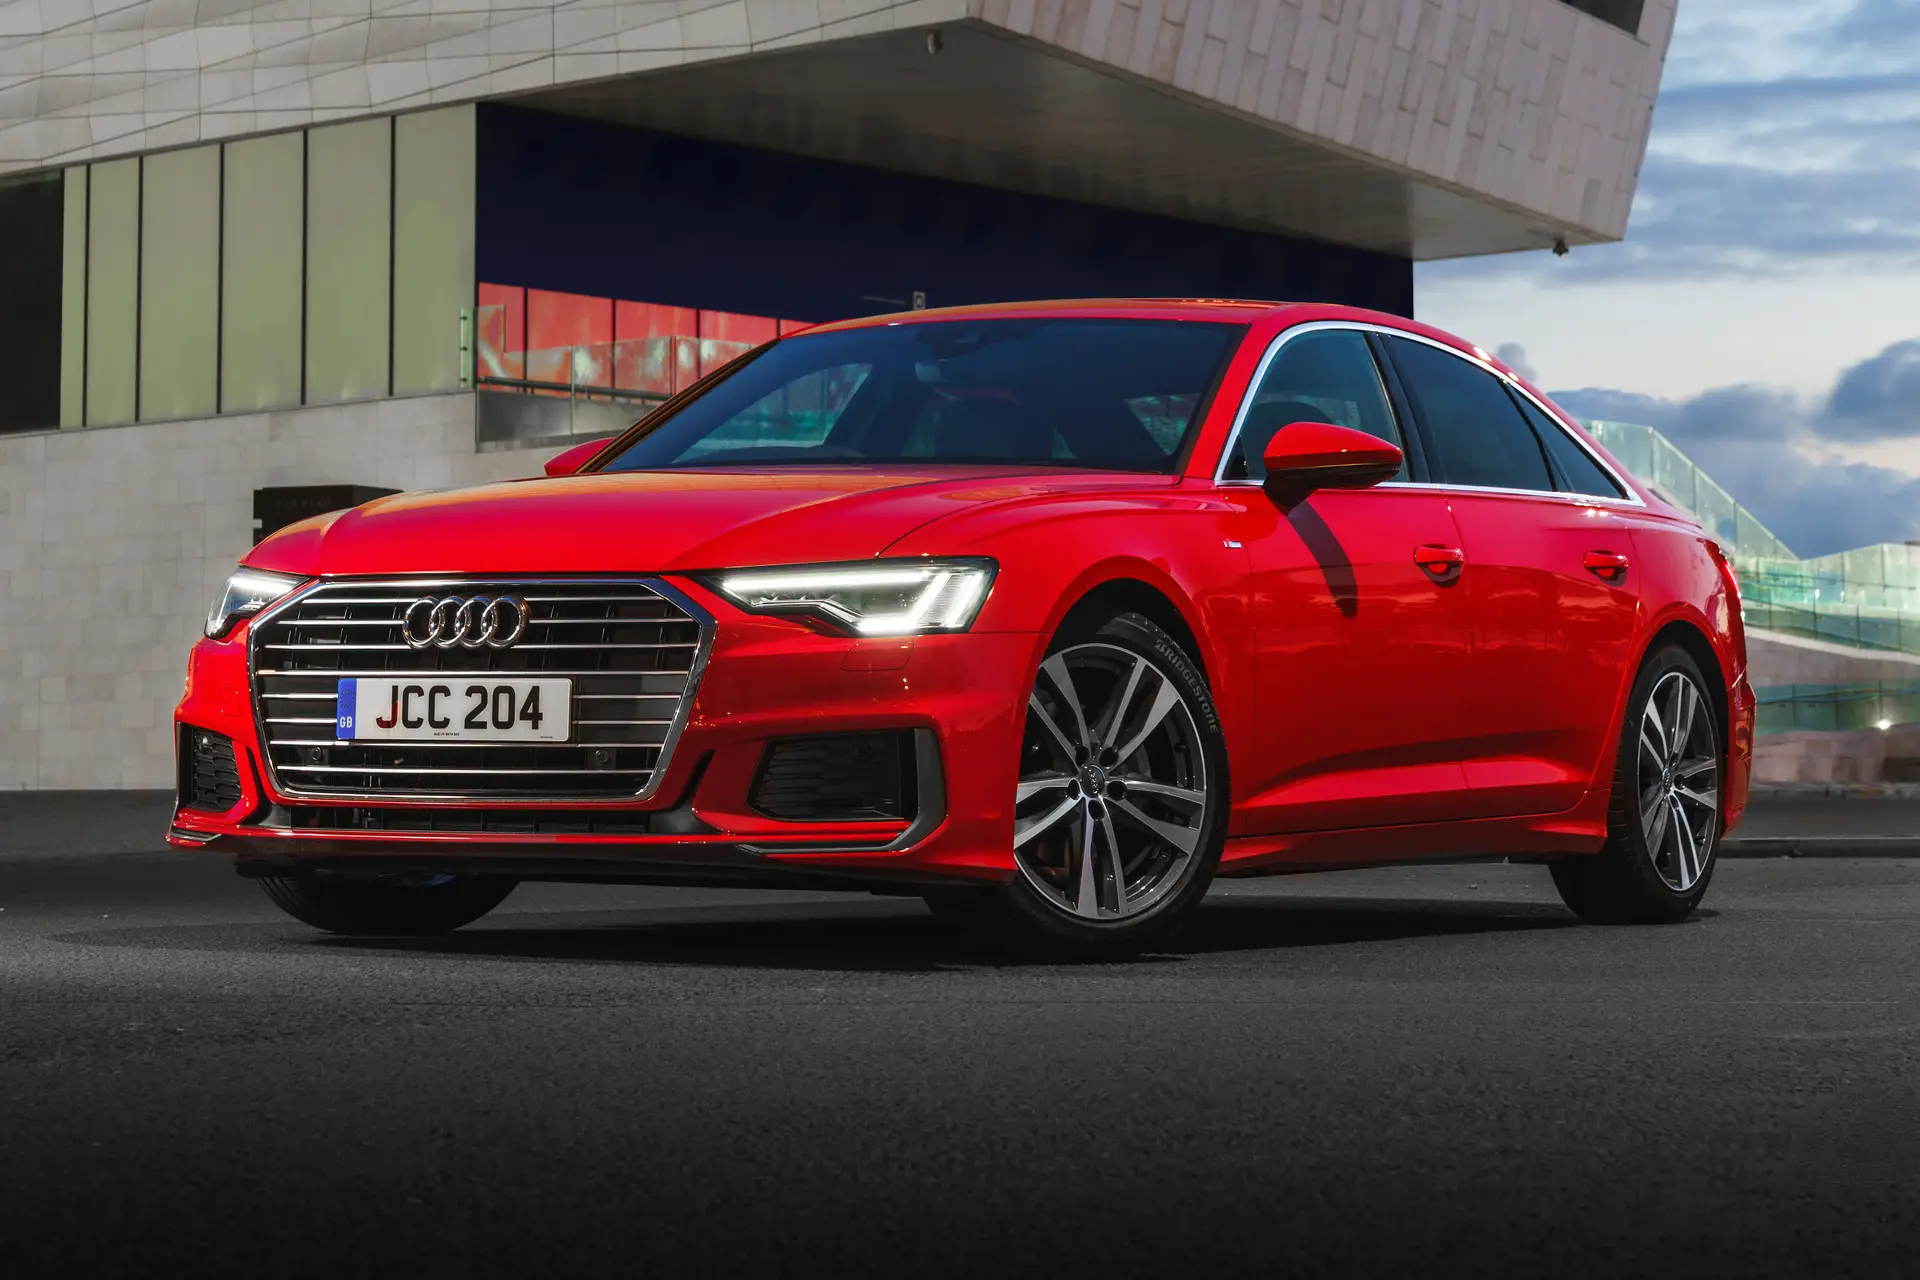 Audi A6 40TDI S Line (2020) Review